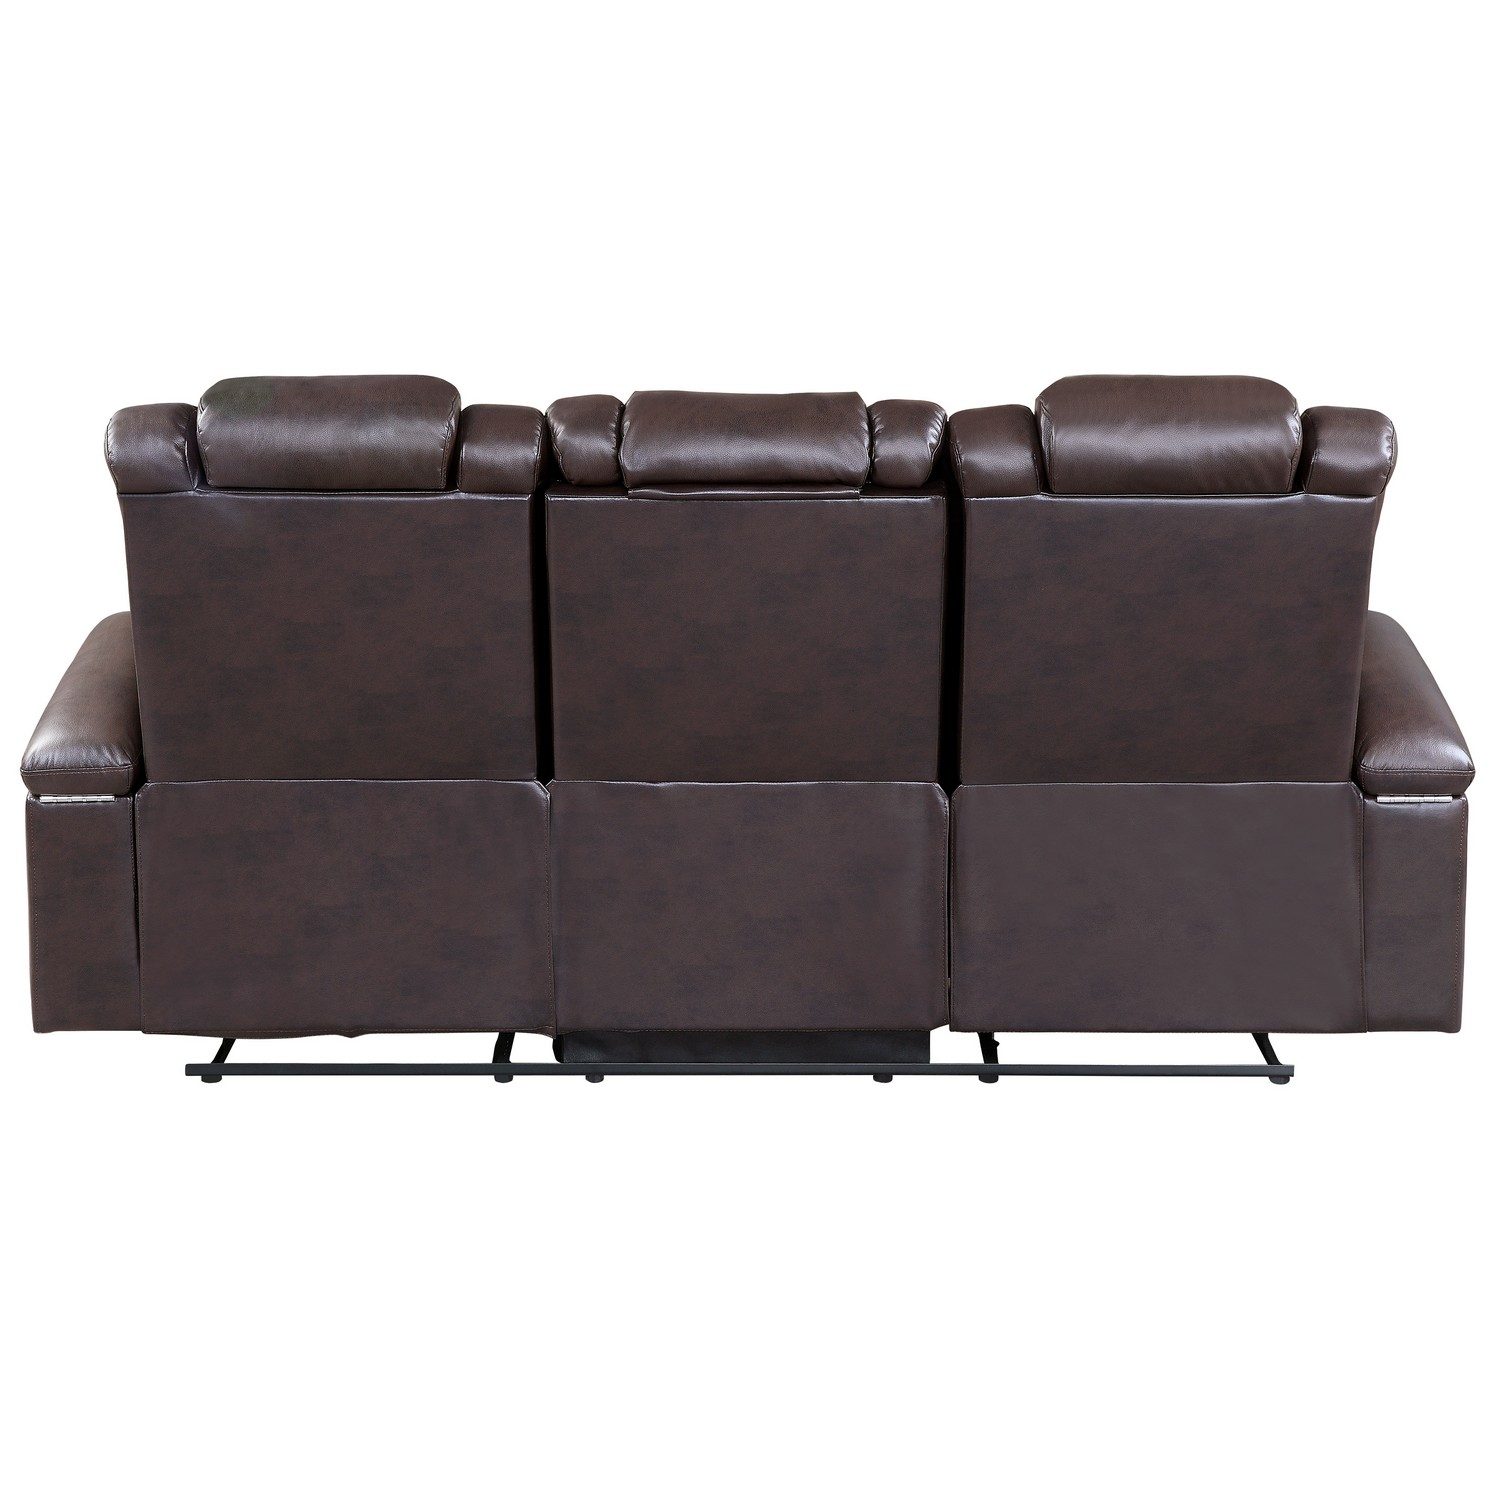 Homelegance Caelan Power Double Reclining Sofa - Dark brown